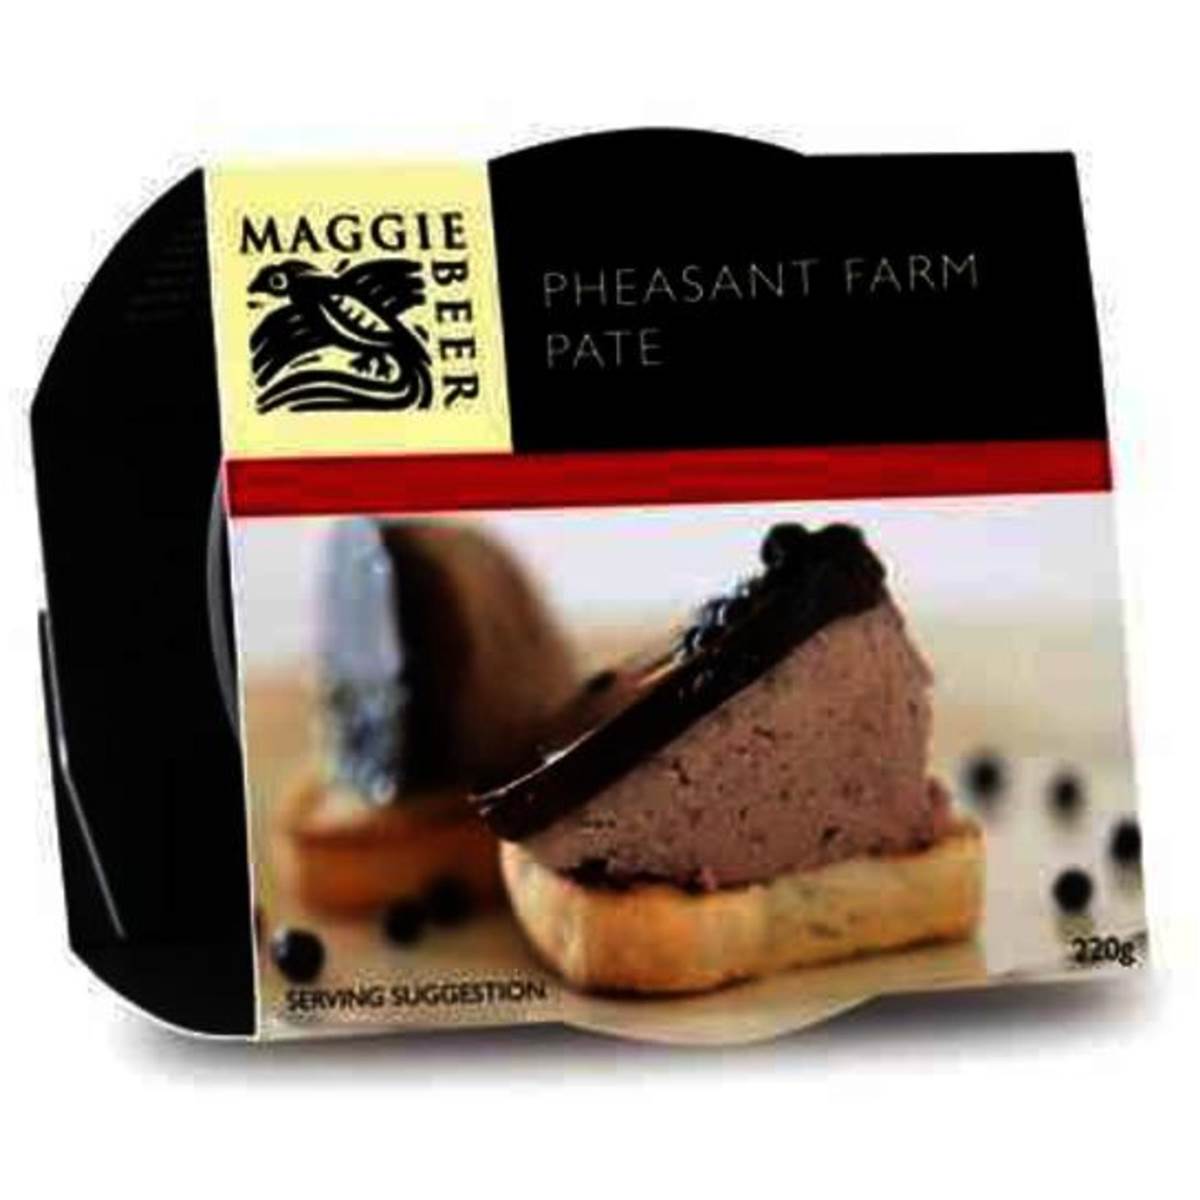 Maggie Beer Pate Pheasant Farm